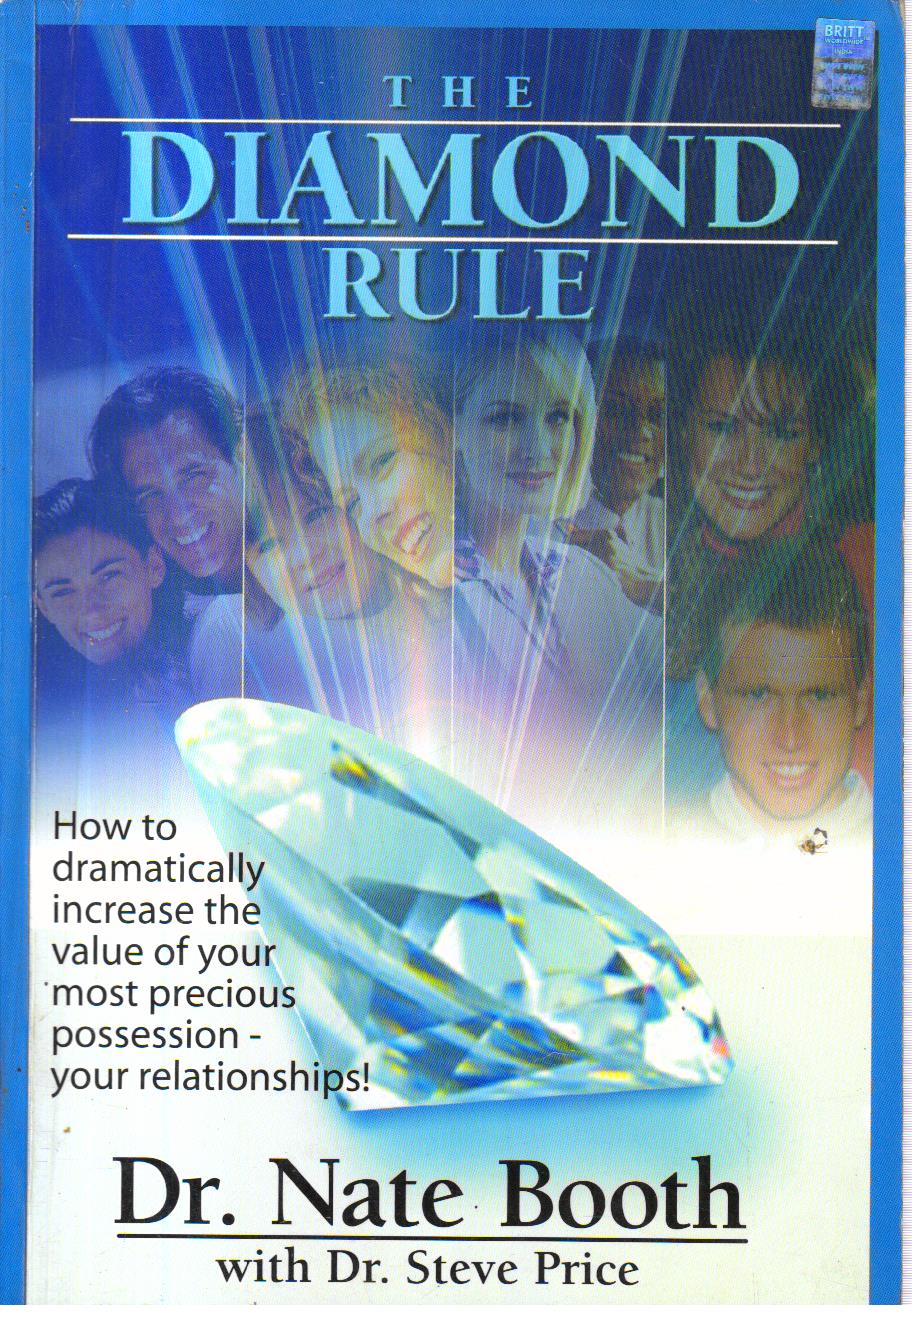 The Diamond Rule Secrets of a Master Diamond Cutter.